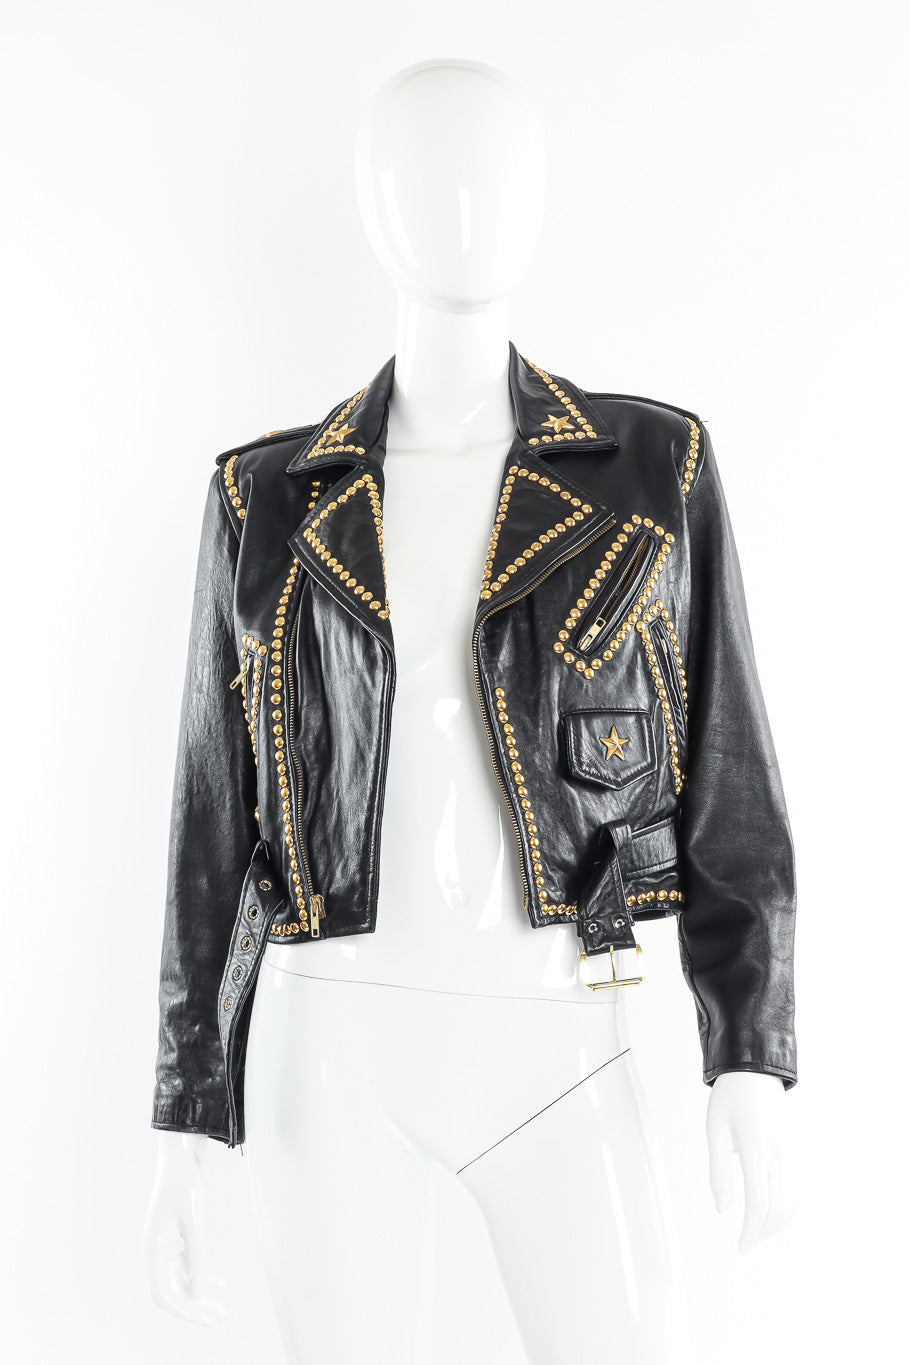 Motorcycle zip jacket by Caché mannequin unzipped @recessla